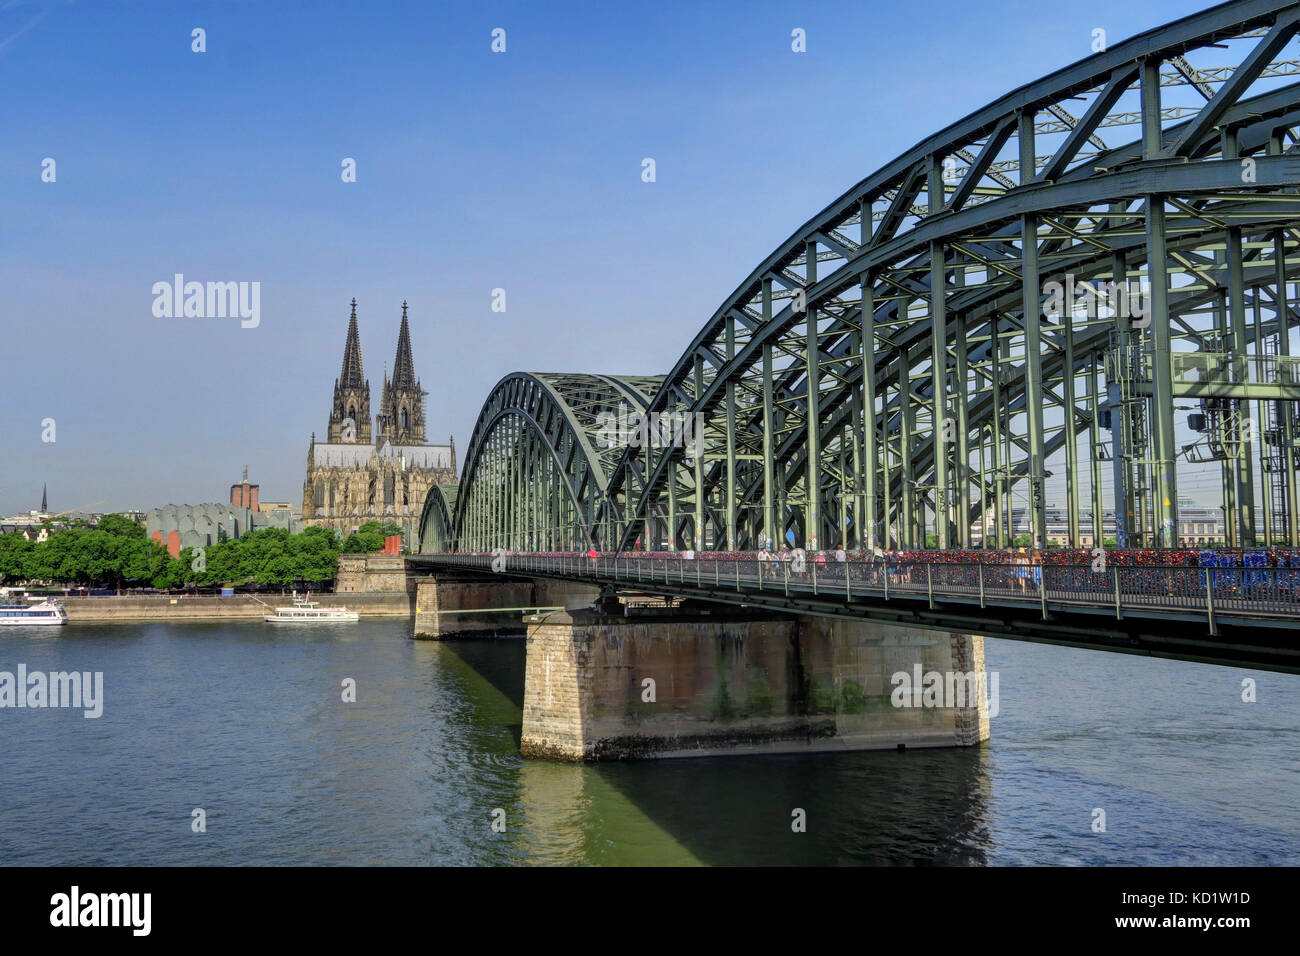 Most heavily used railway bridge in Germany, connecting the Köln Hauptbahnhof and Köln Messe/Deutz stations. Stock Photo